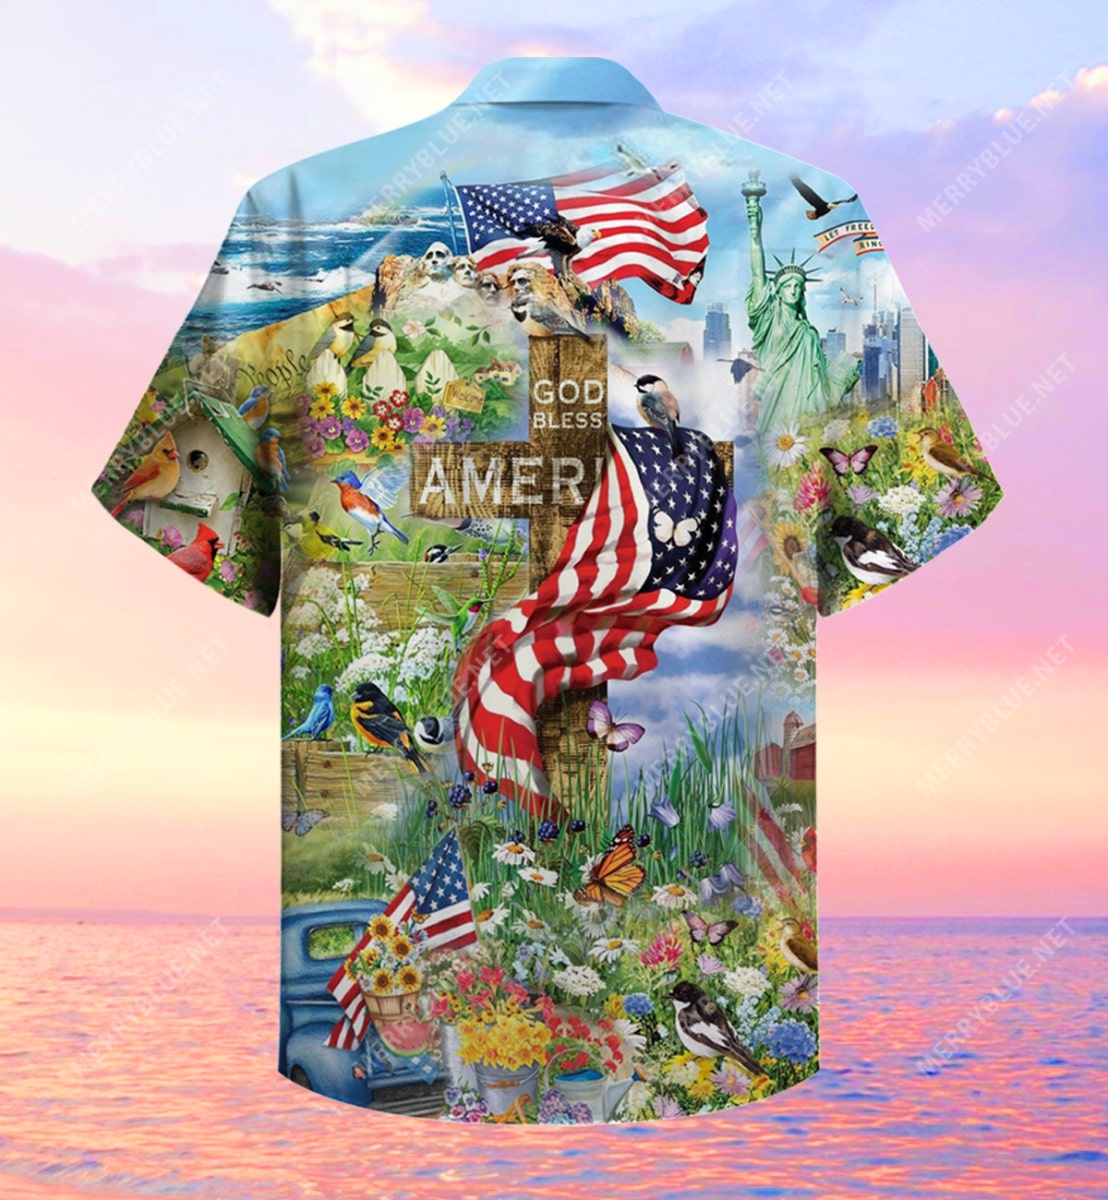 God bless american all over printed hawaiian shirt 5